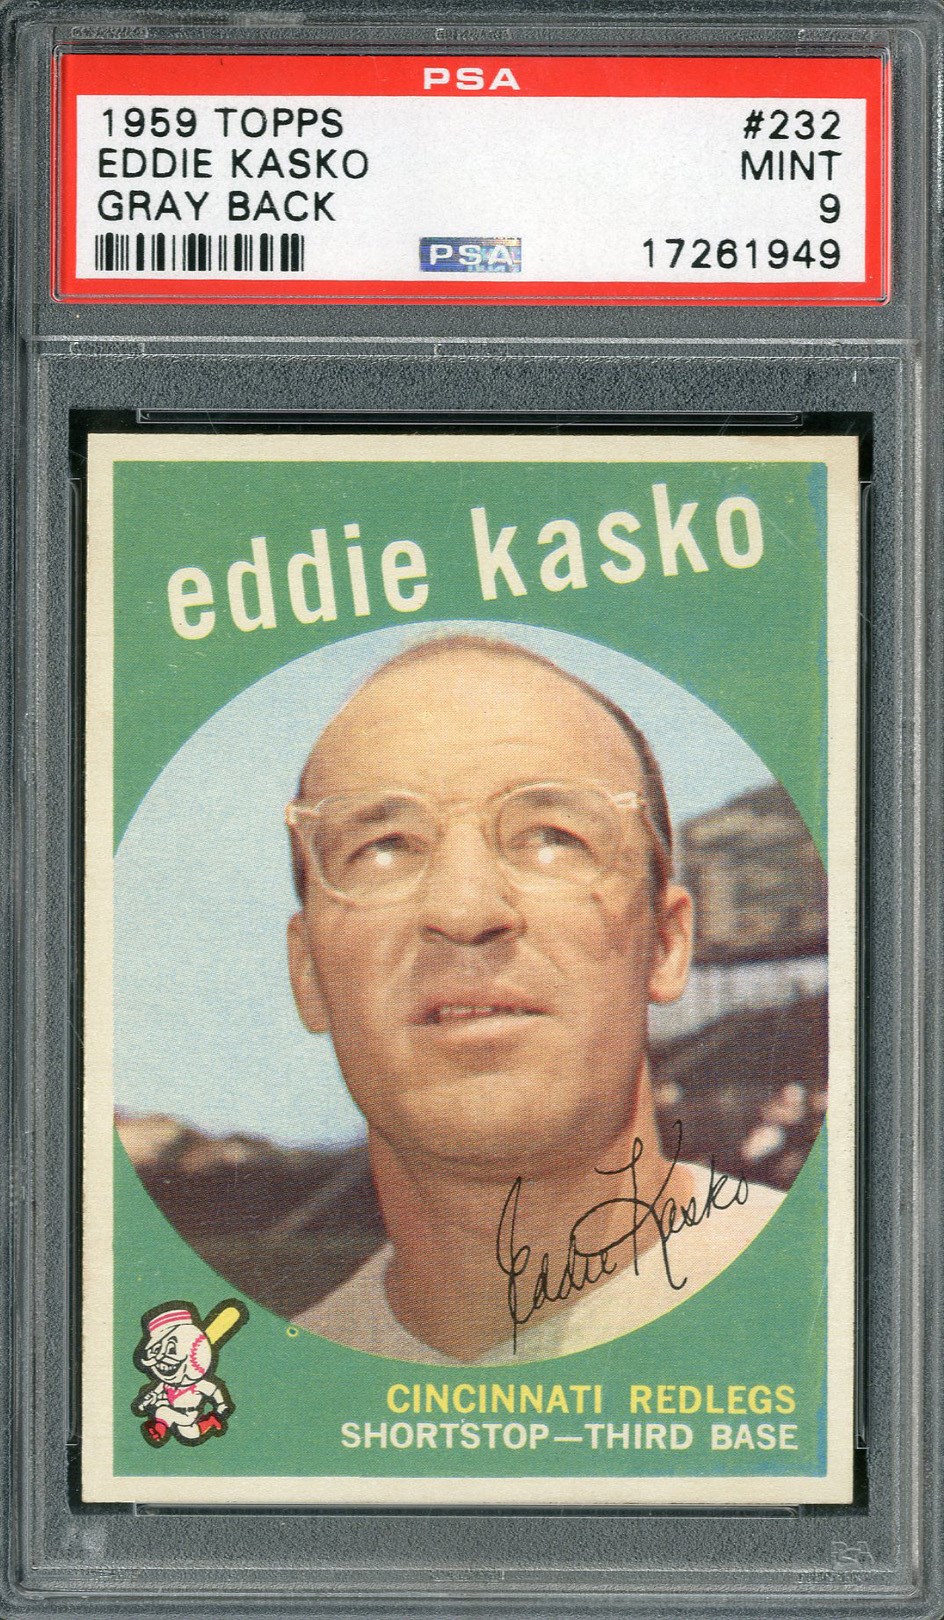 - 1959 Topps #232 Eddie Kasko Gray Back PSA MINT 9 (Pop 2)